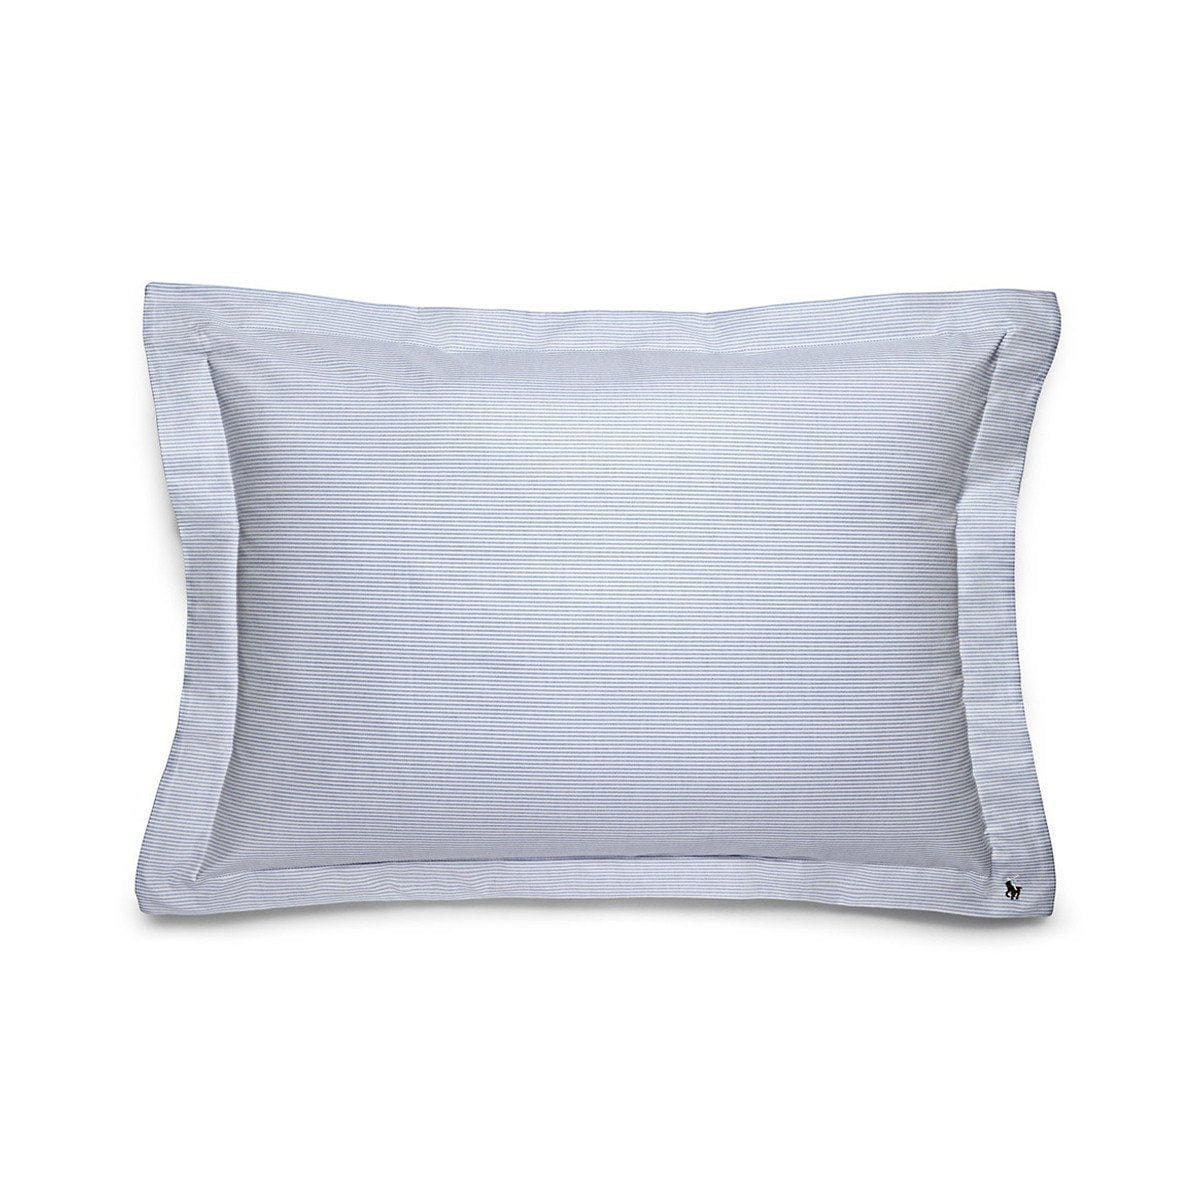 Ralph Lauren Oxford Blue Pillowcase Pair 50x75